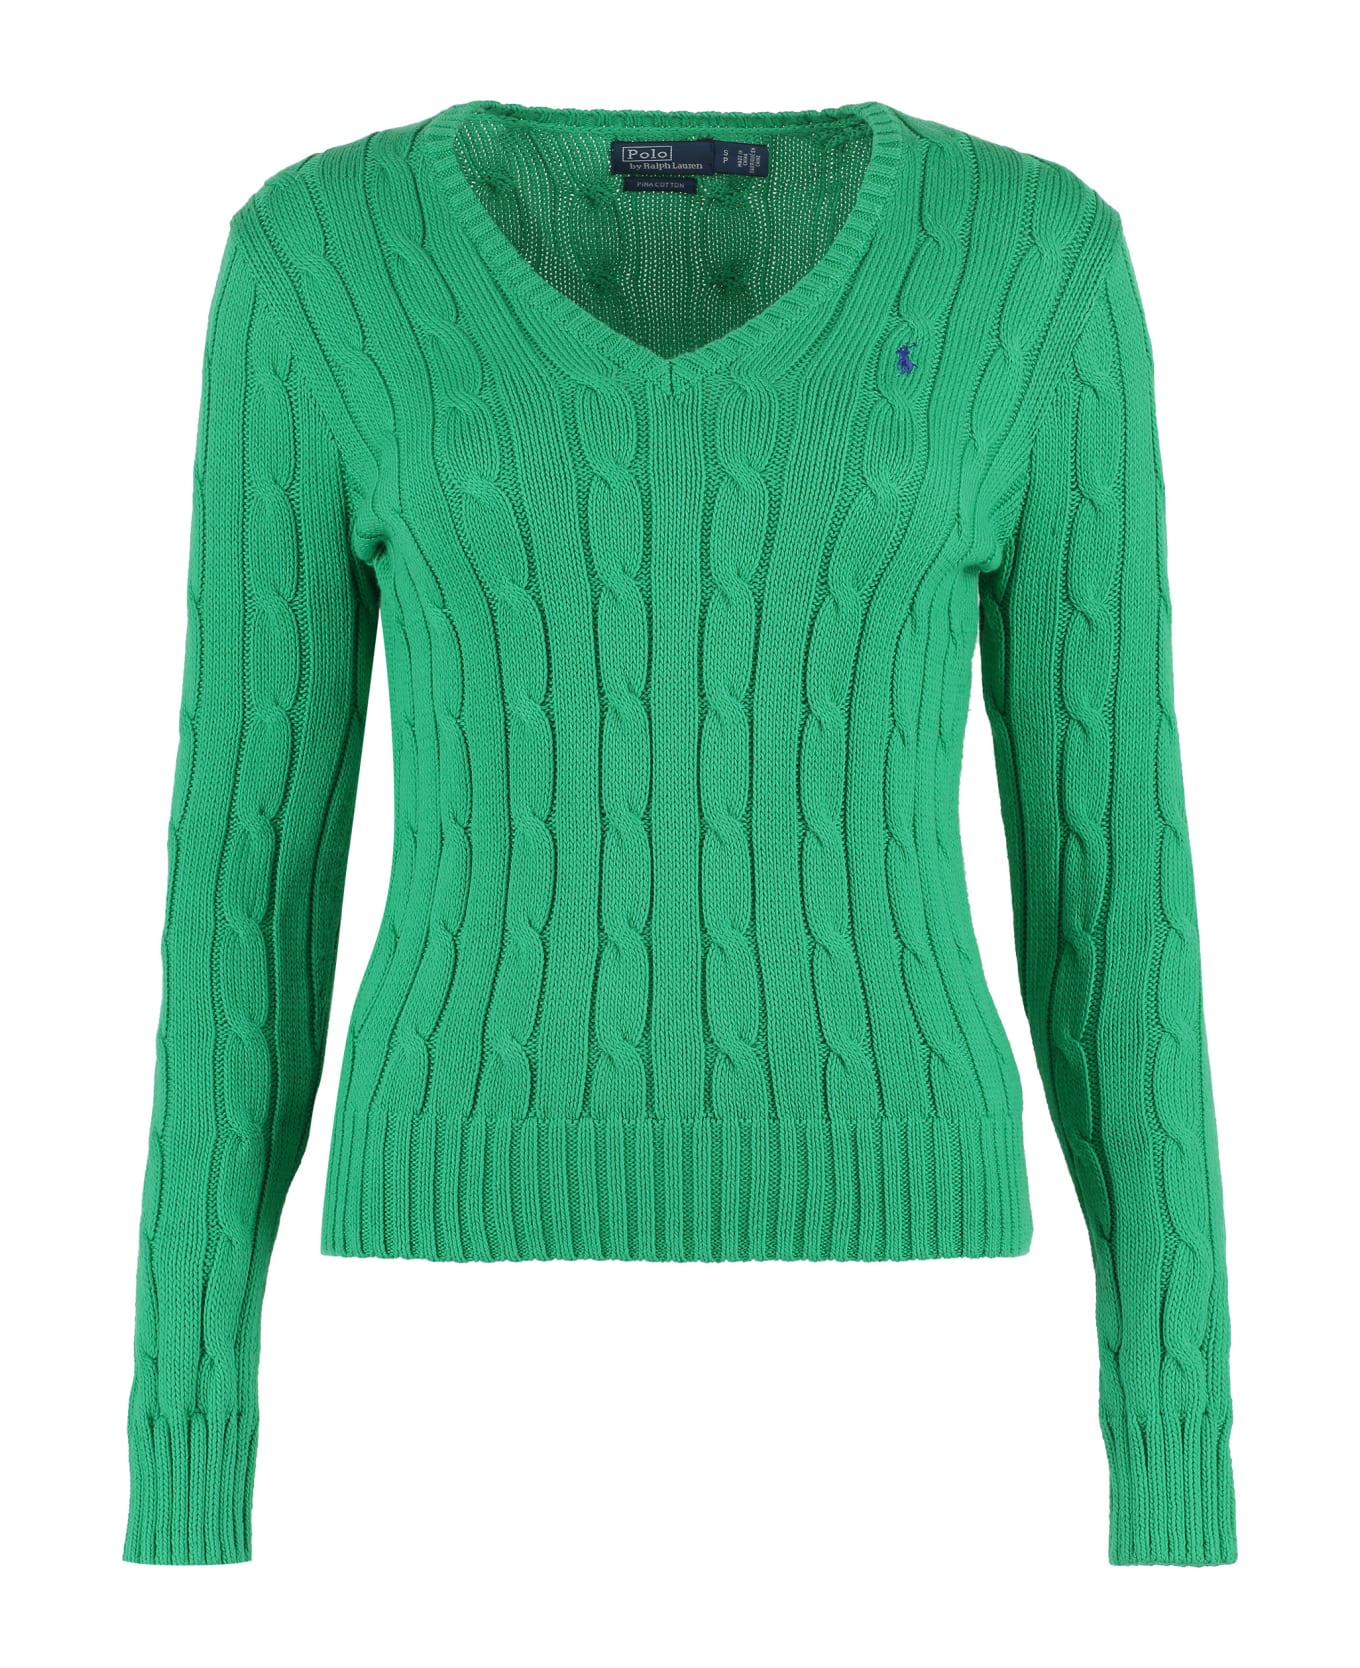 Ralph Lauren Cable Knit Sweater - Preppy Green ニットウェア